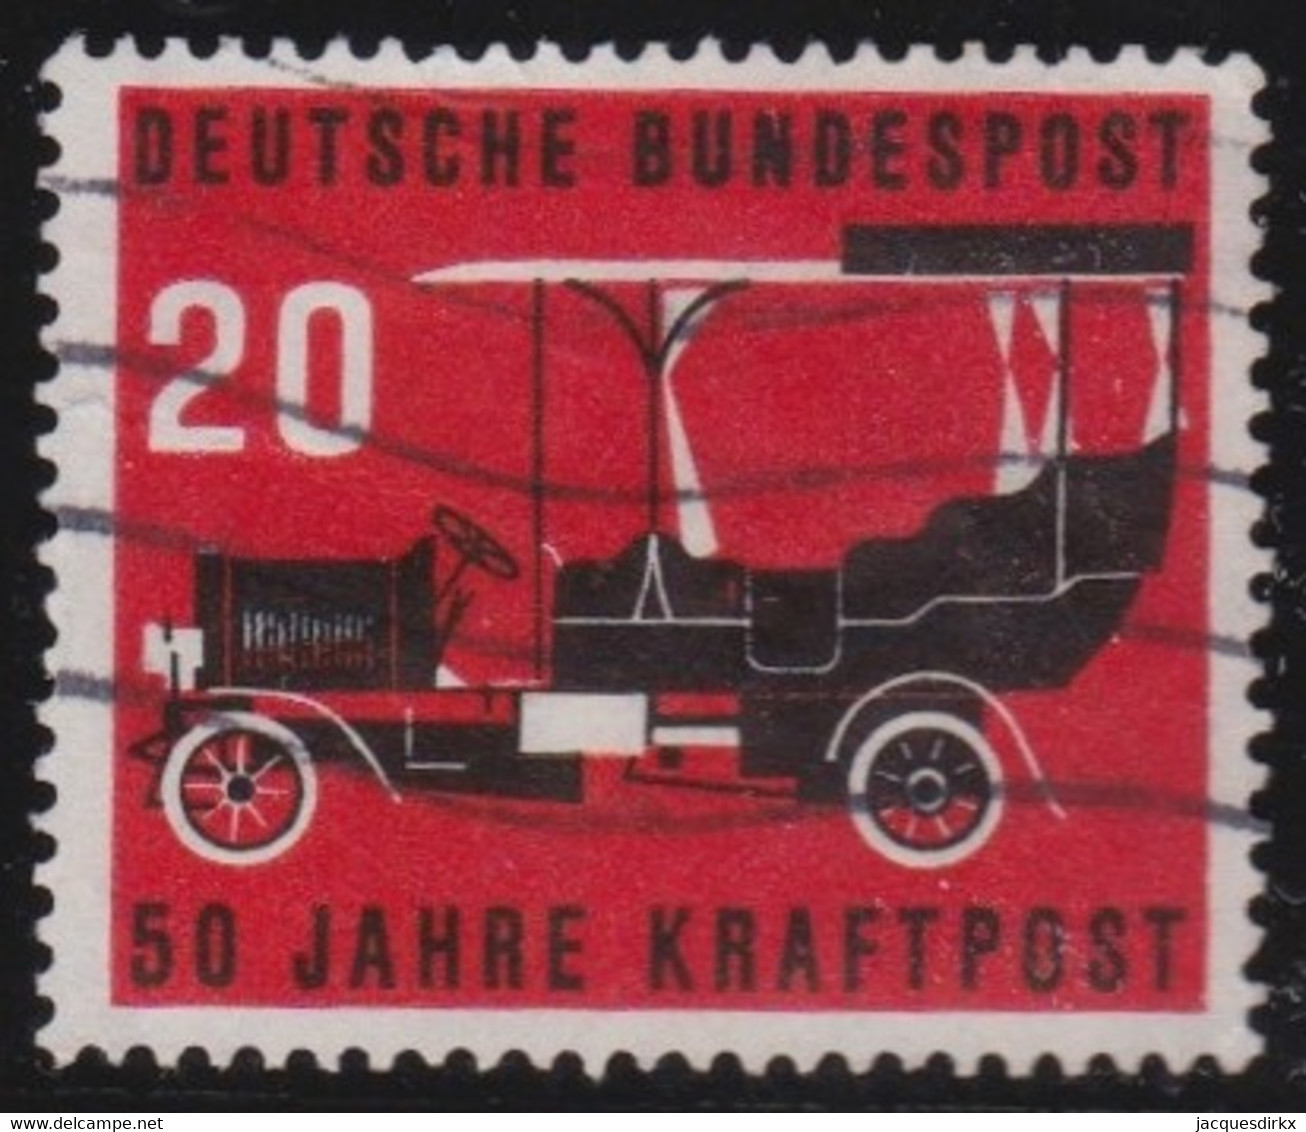 BRD     .   Michel    .    211    .    O    .      Gestempelt - Used Stamps